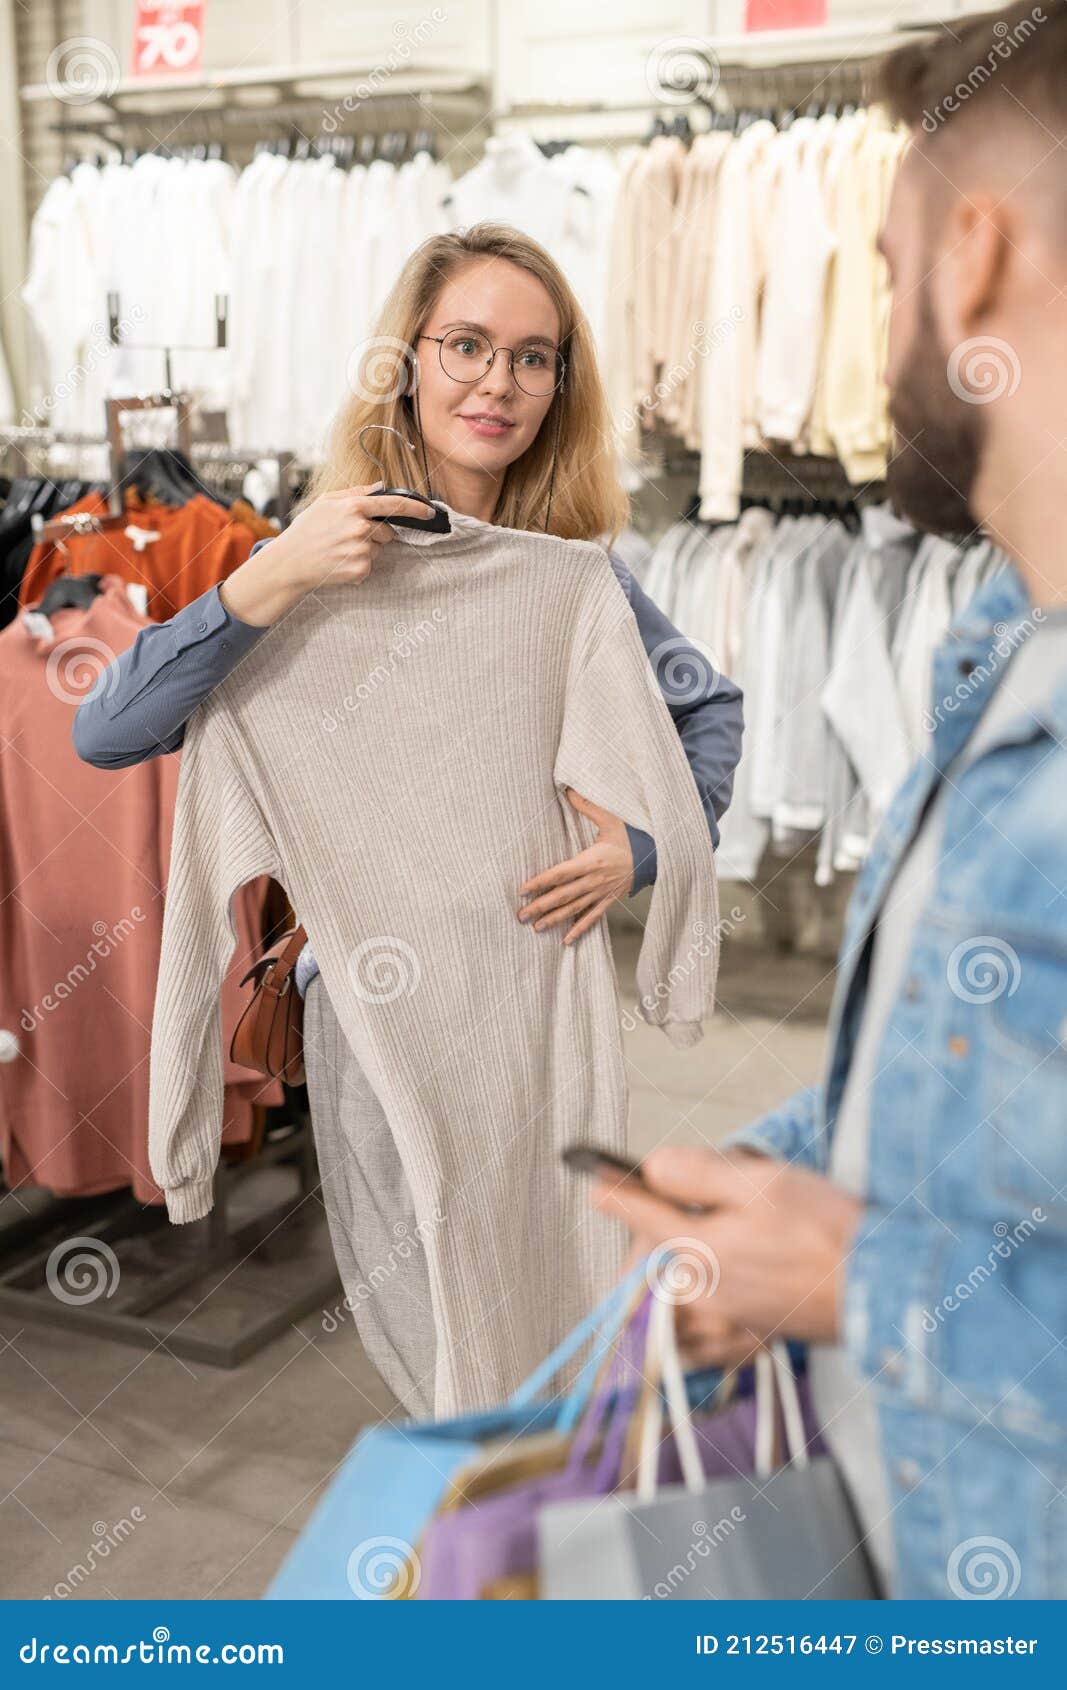 Woman Updating Her Wardrobe Stock Image - Image of smiling, elegance ...